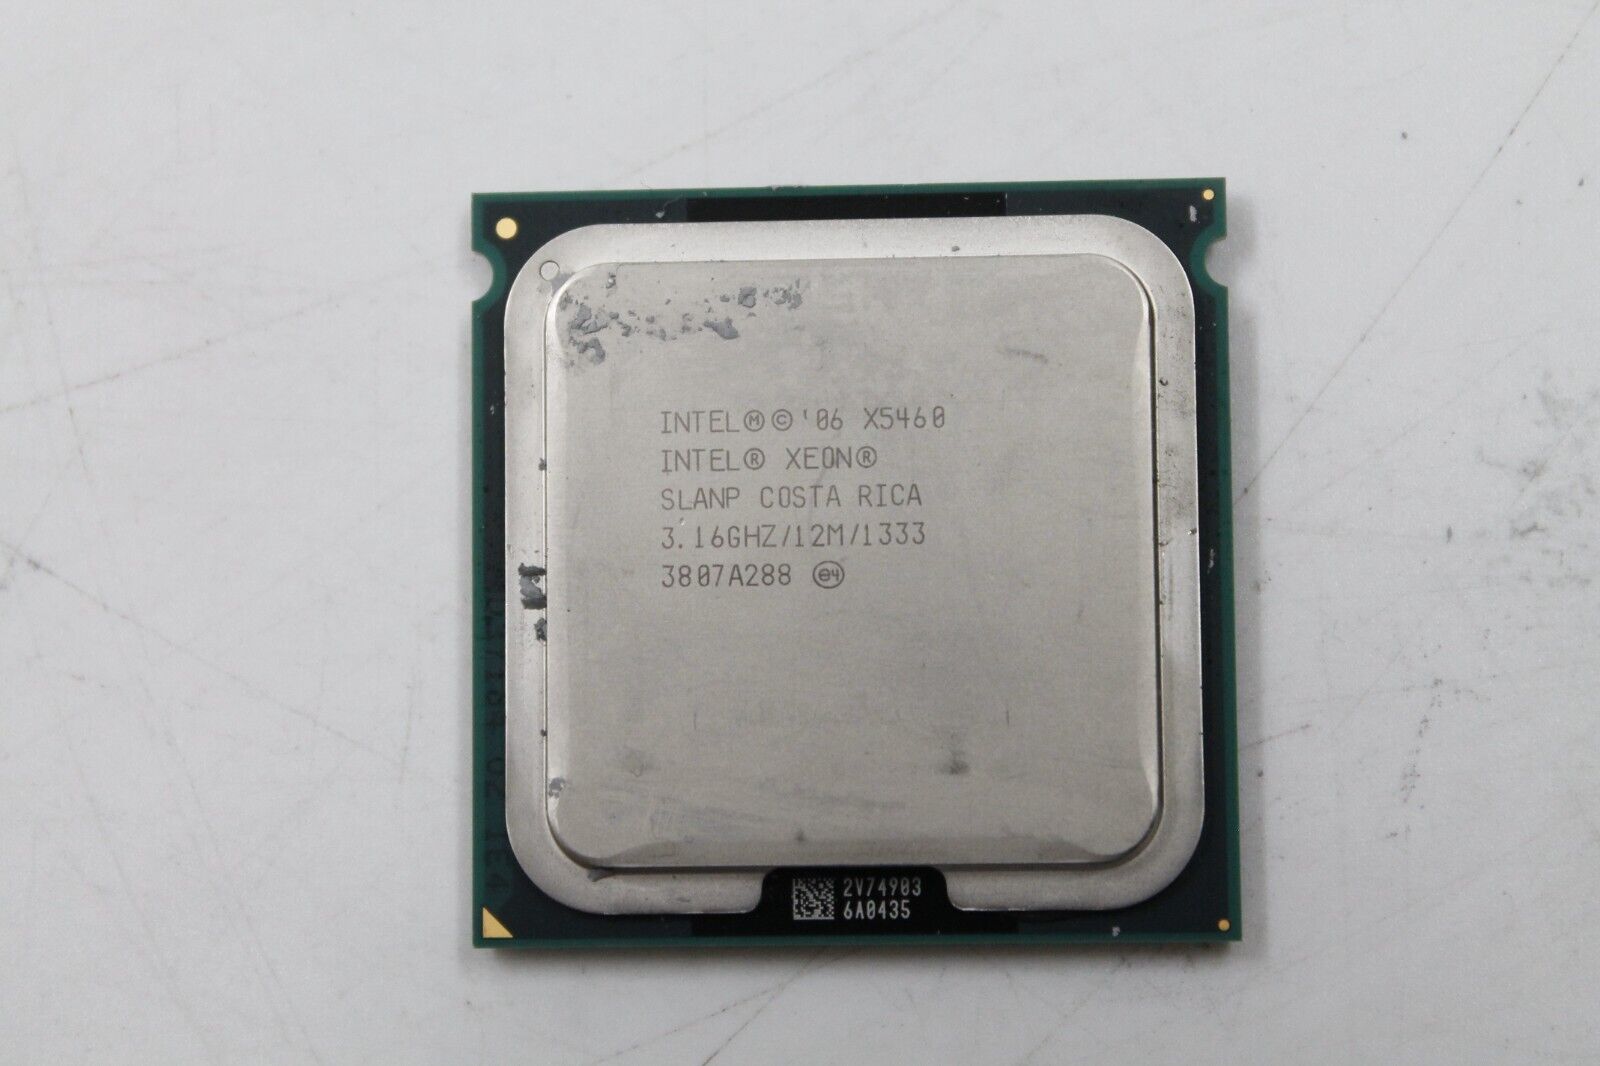 Intel Xeon X5460 SLANP 3.16GHZ/12M/1333 CPU PROCESSOR